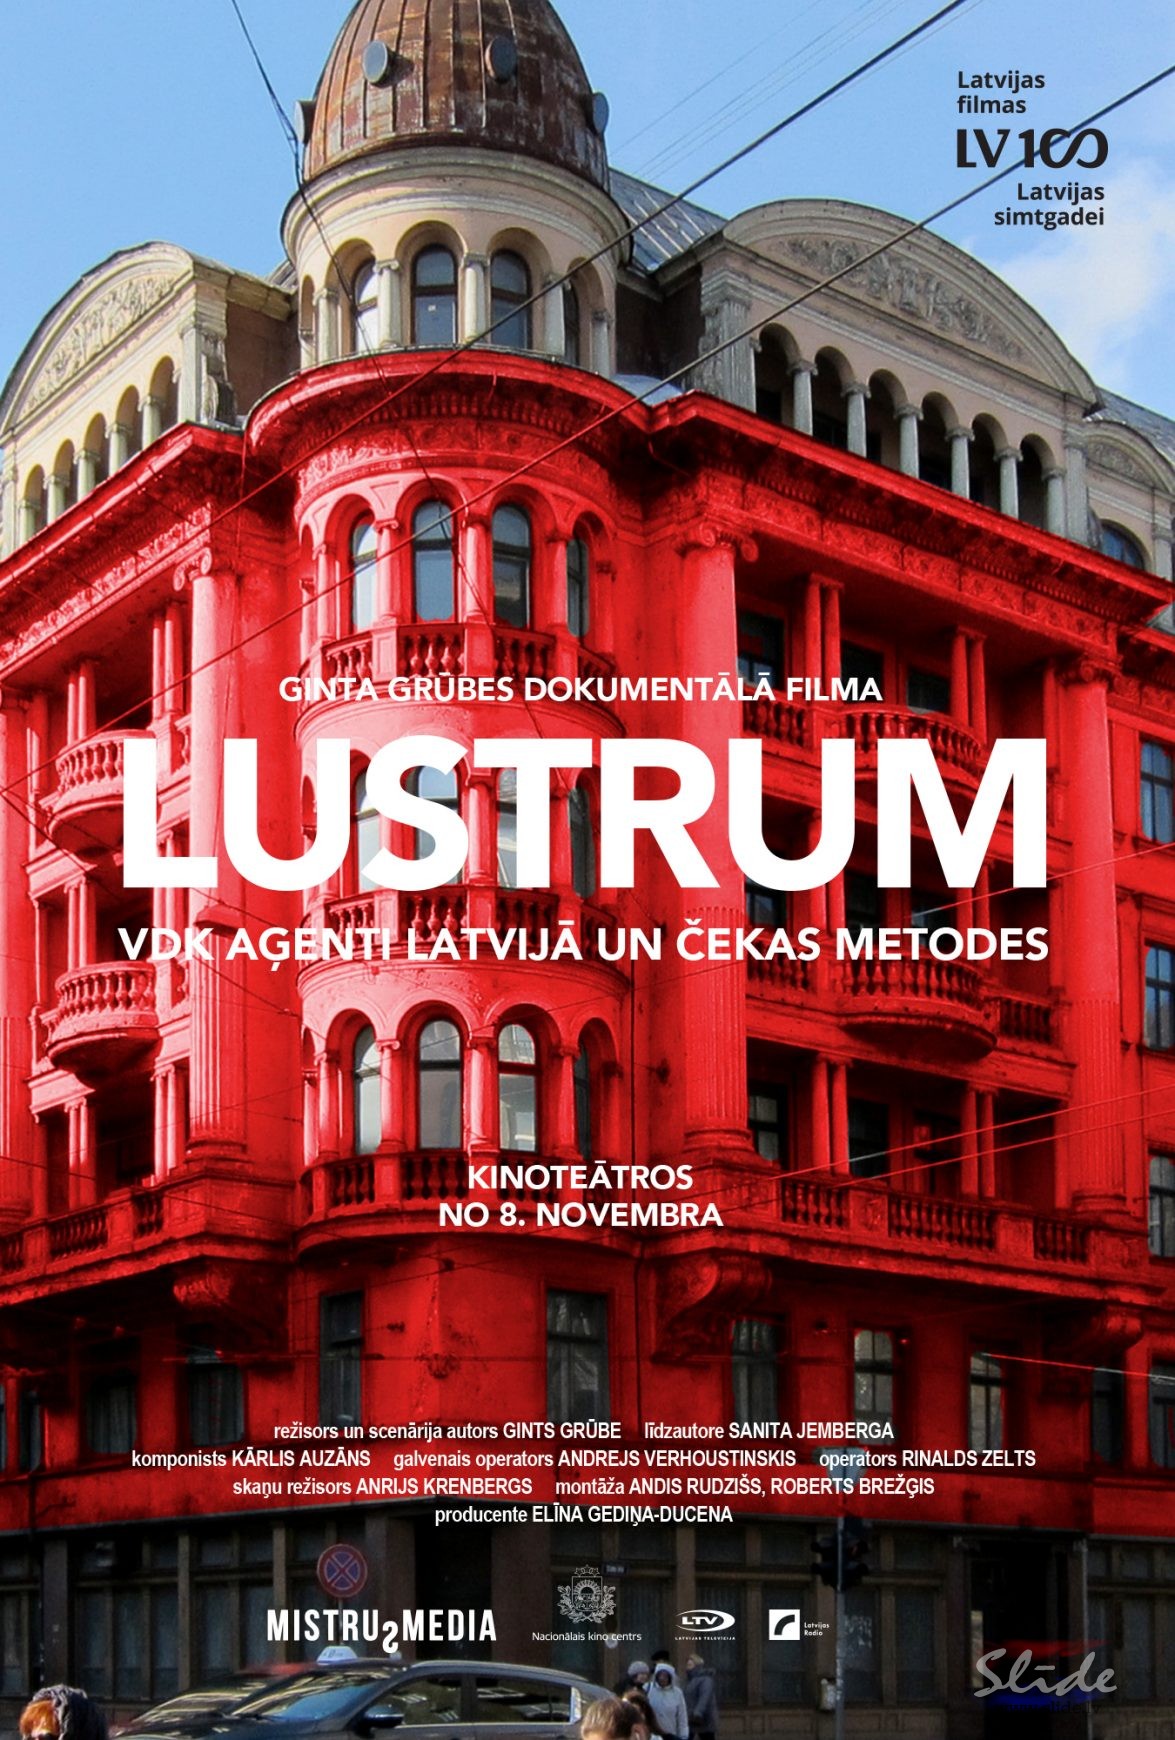 LV 100 filma “Lustrum” Saulkrastos